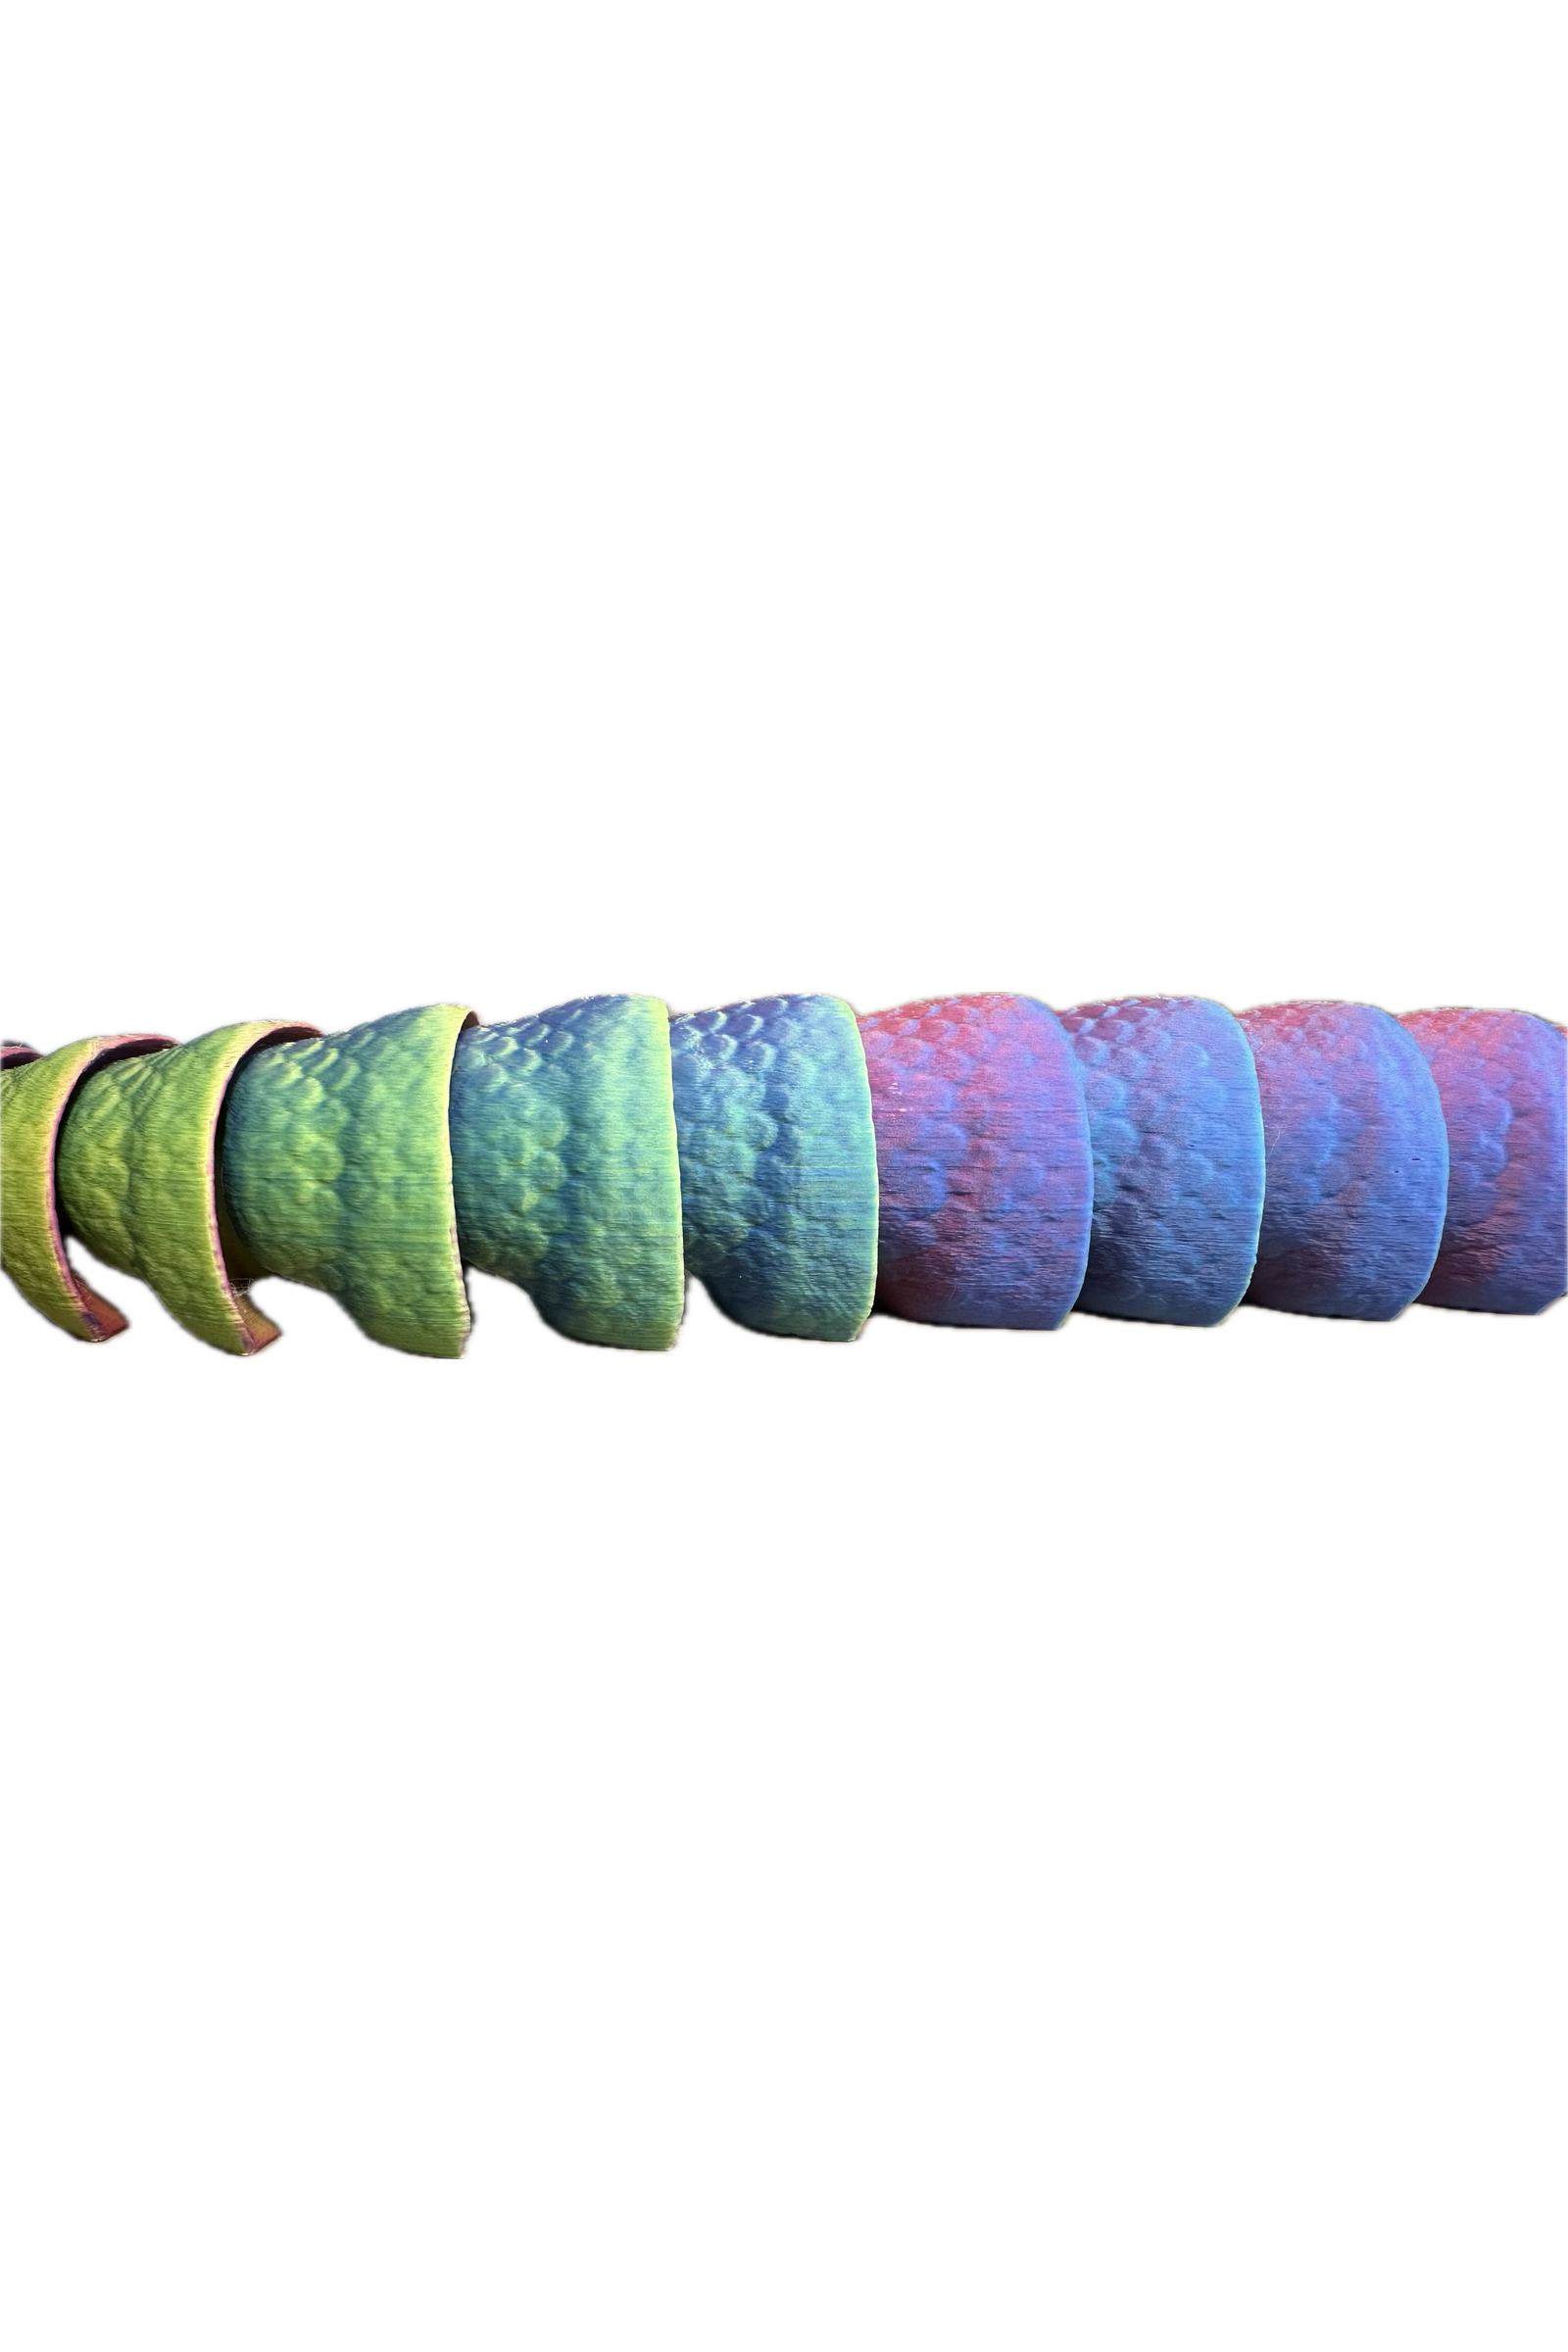 Serpent Joyeux 3D - Ultra Néon Créations Sortilege